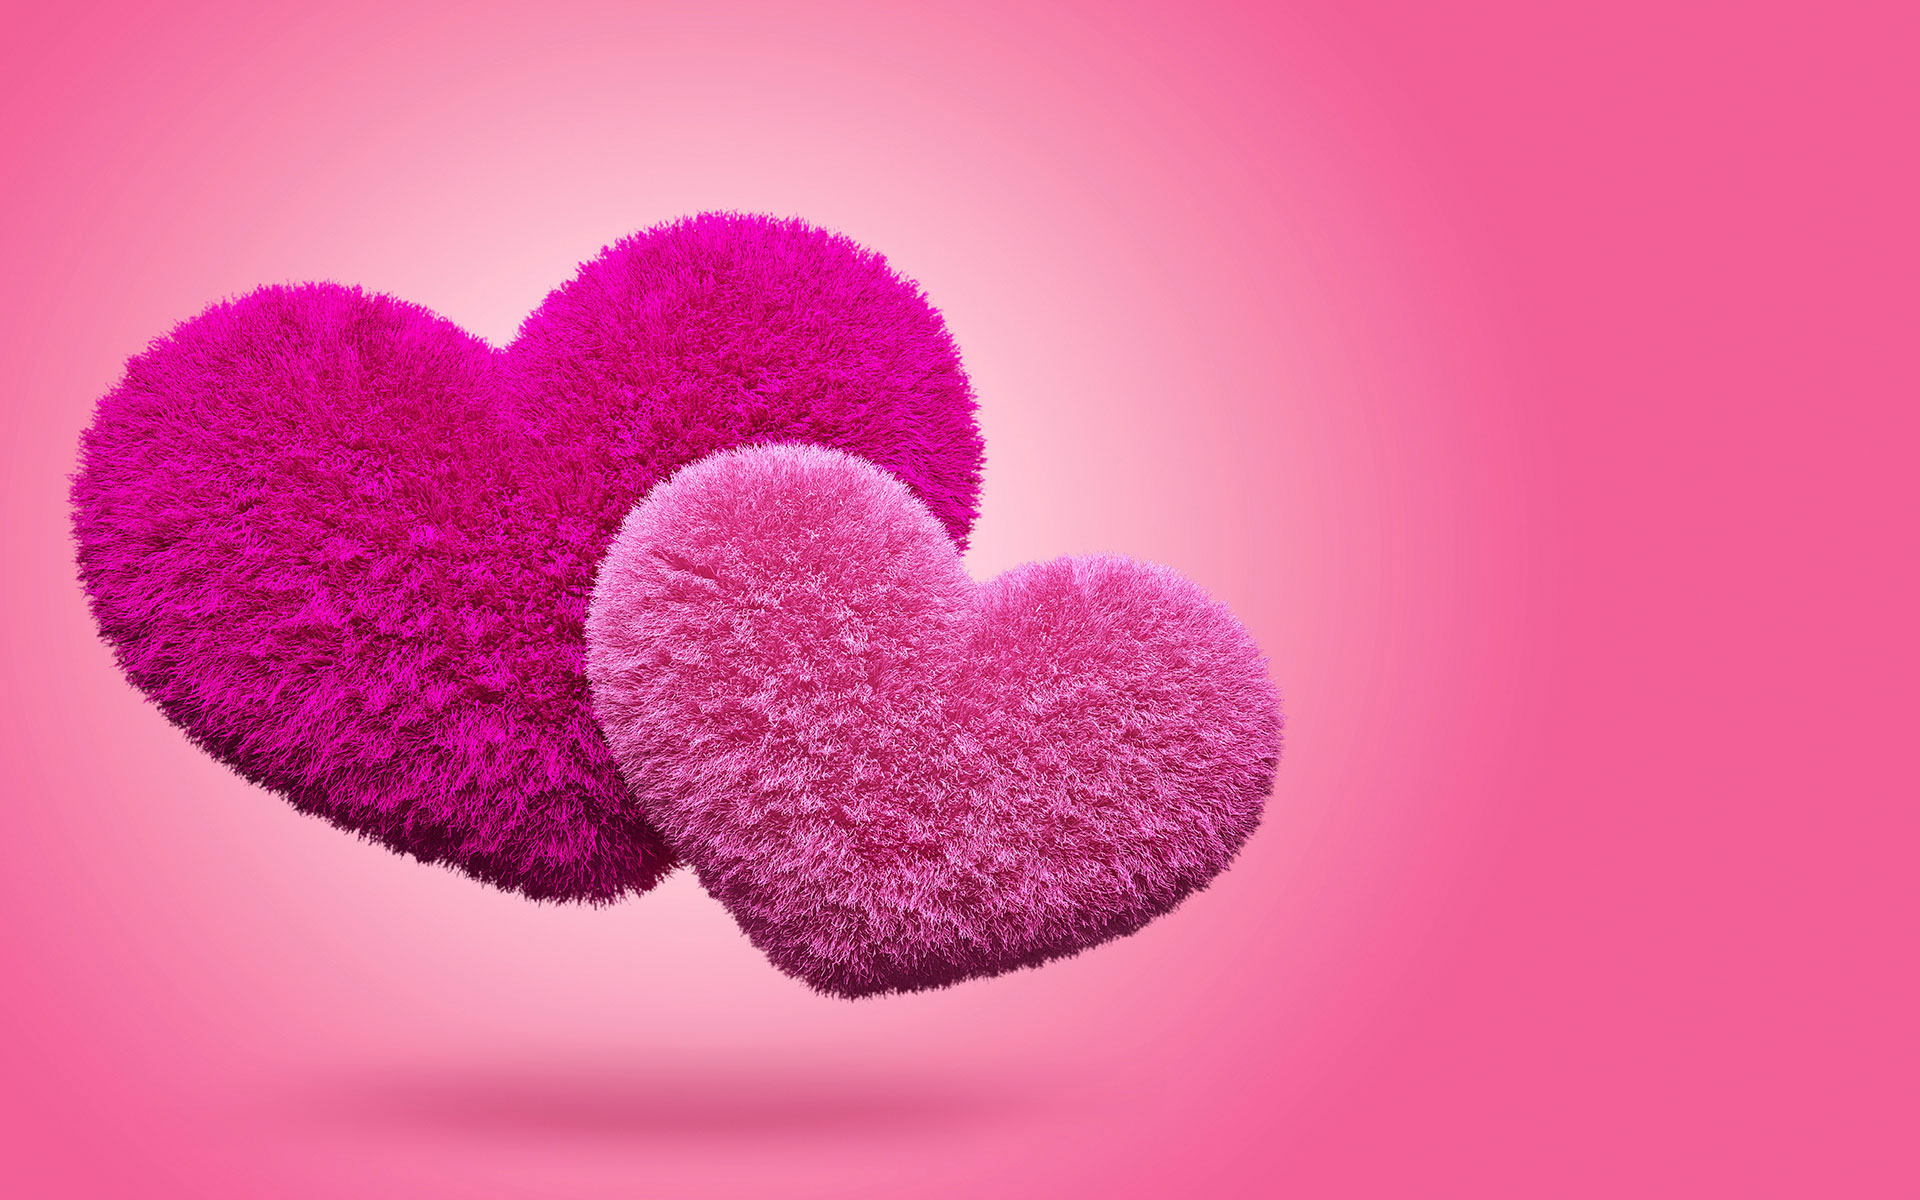 Cute Love Heart Wallpaper HD Pink